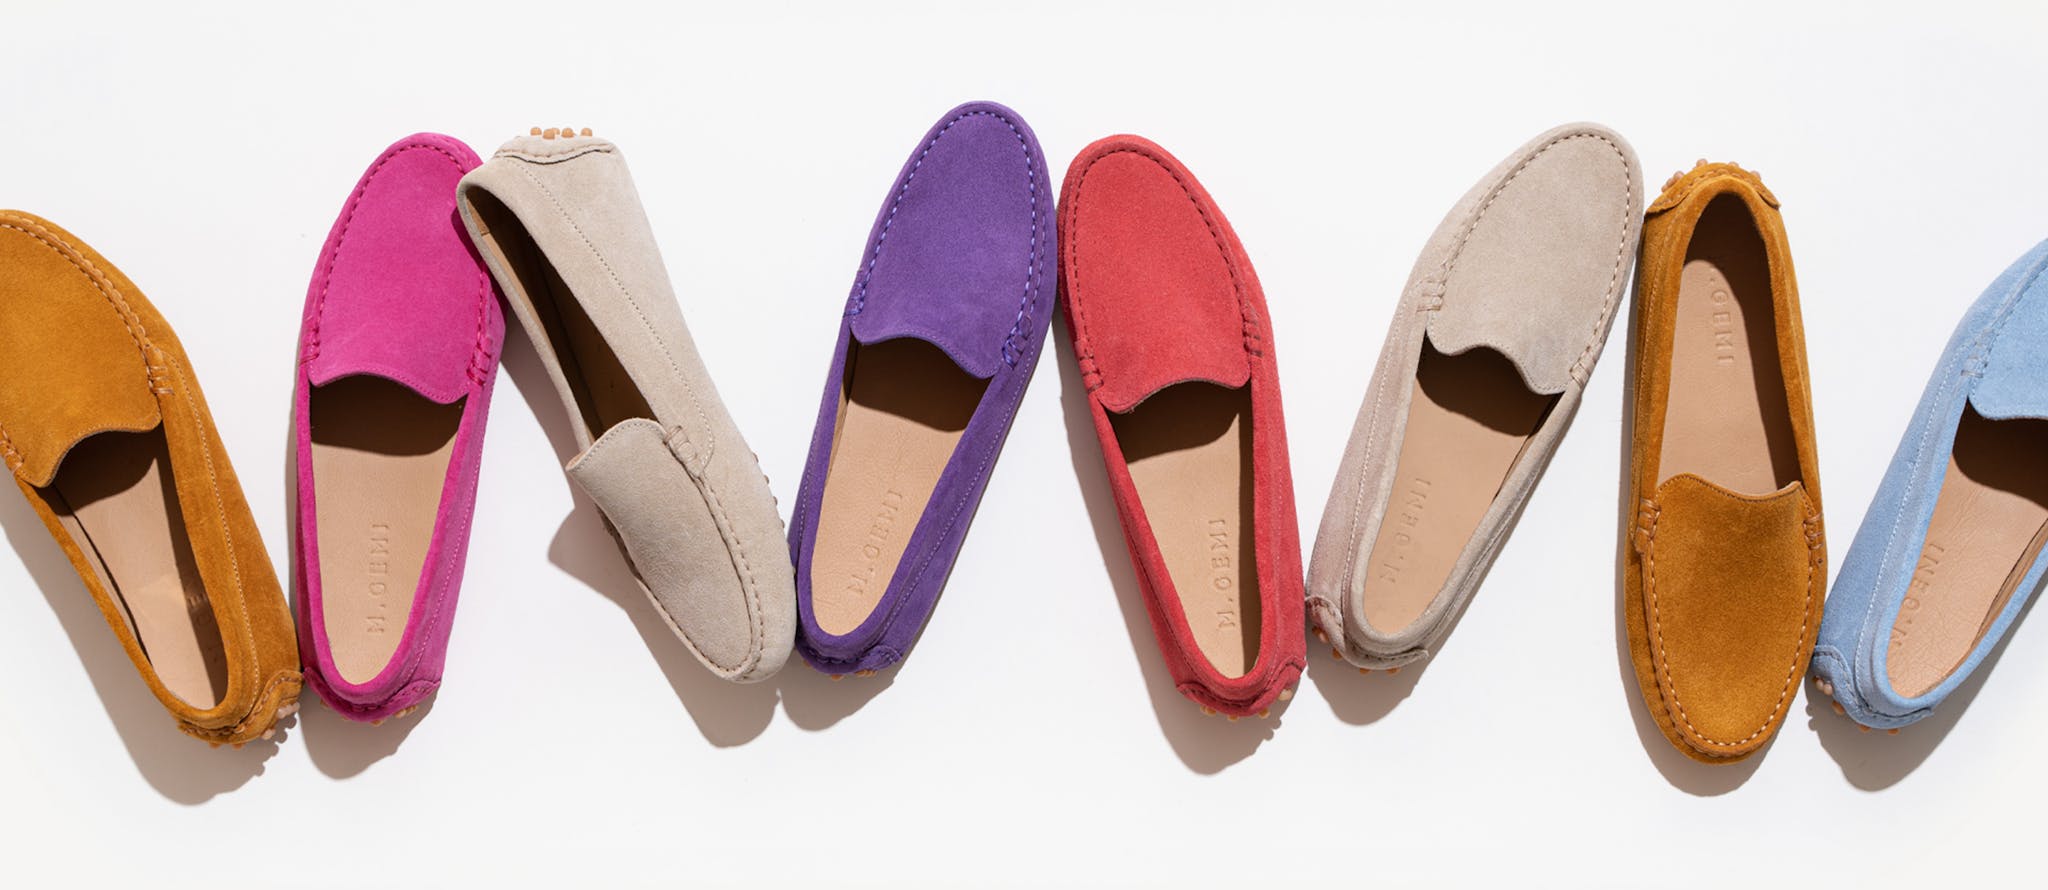 M.Gemi | Discover Italian Shoes for Women